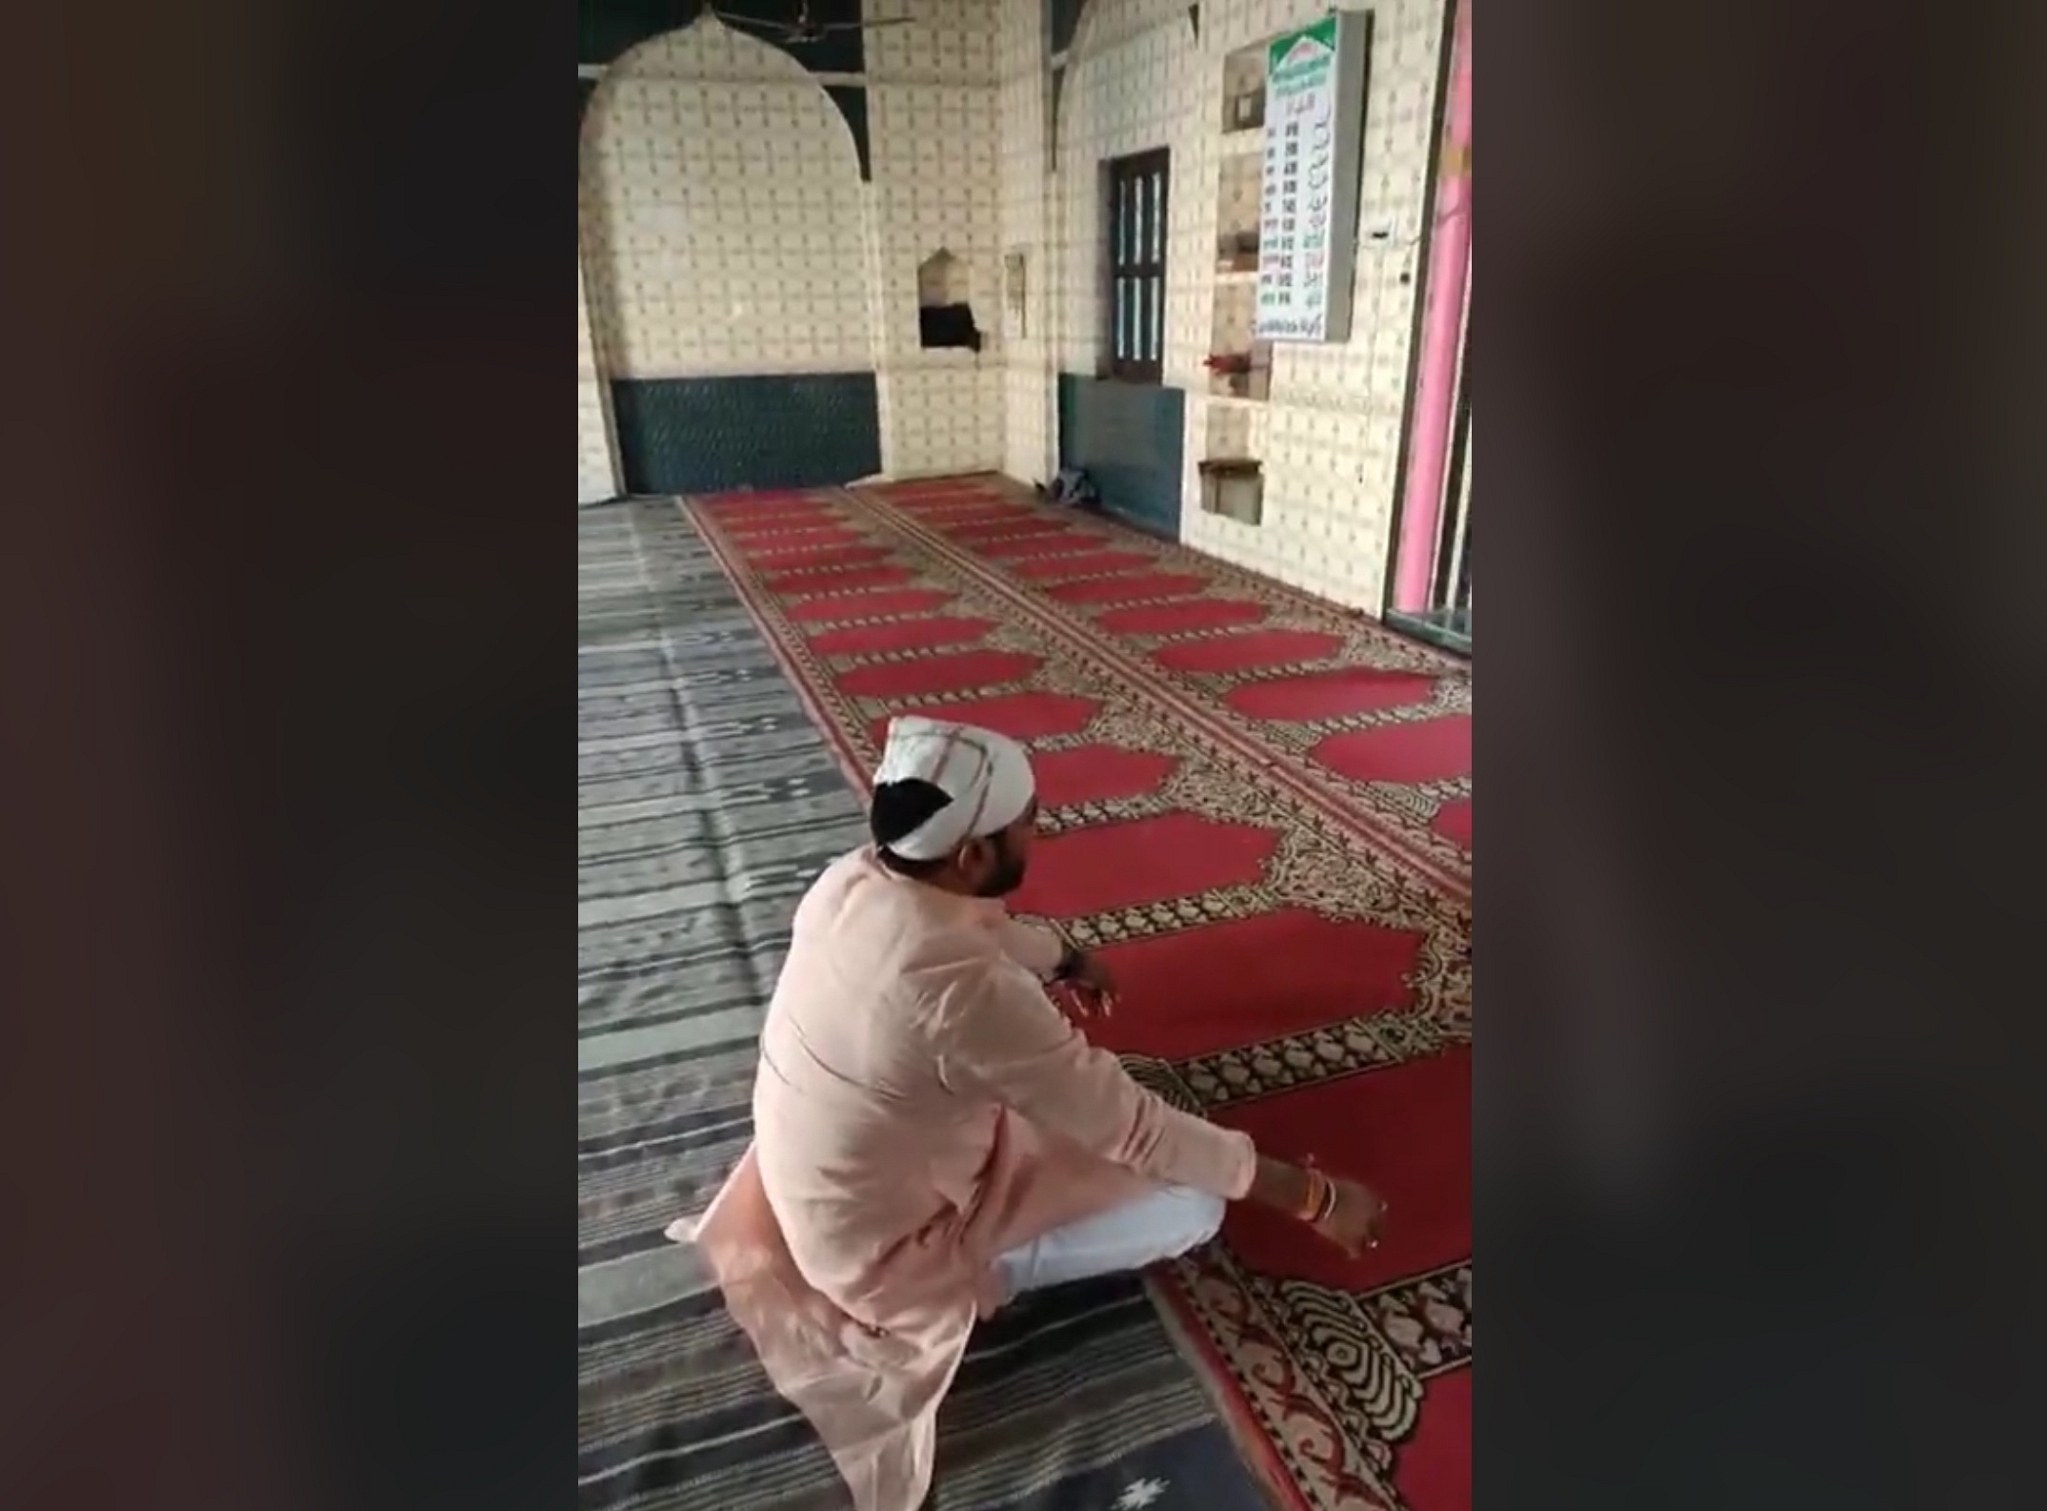 A still from video of Manupal Bansal reciting Hanuman Chalisa inside a mosque on 3 November